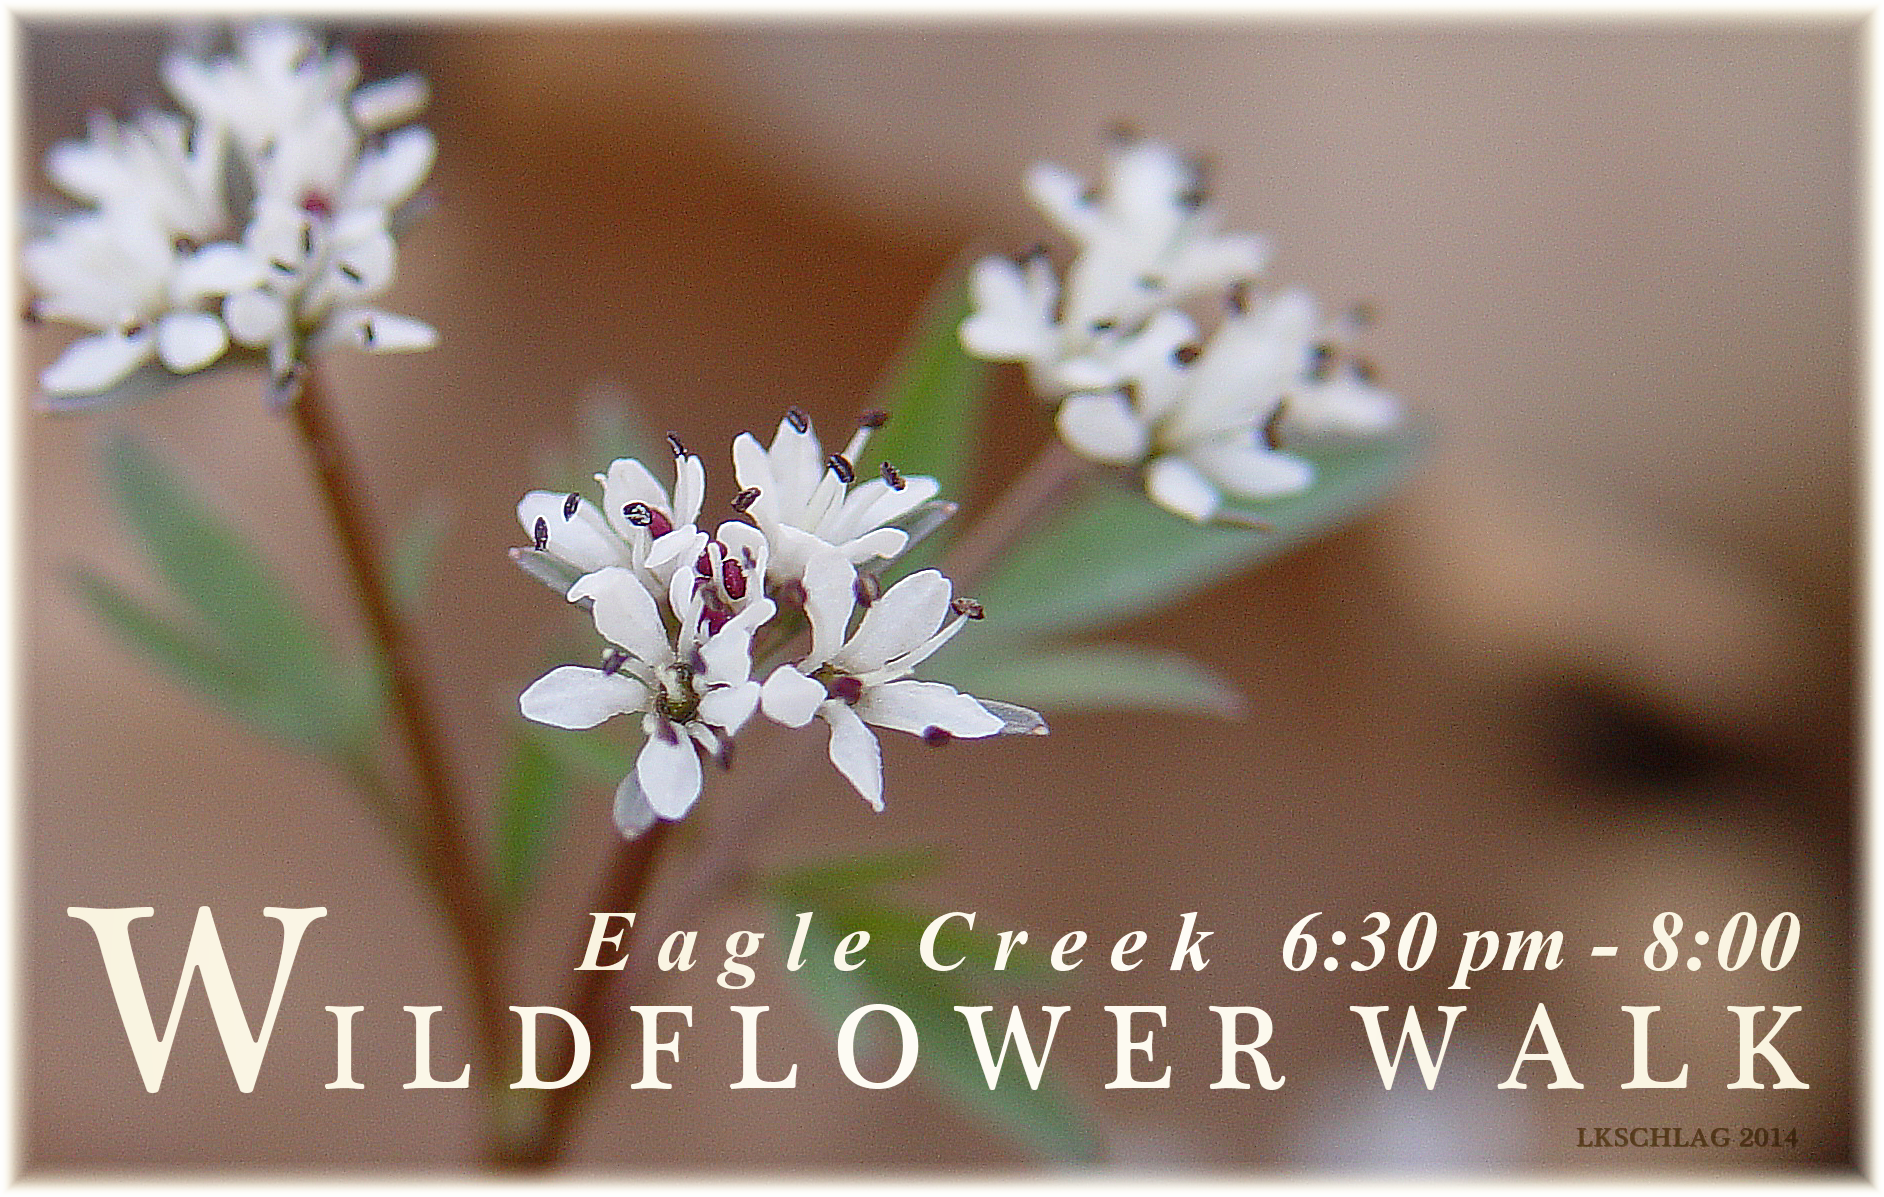 Wildflower Walk program infographic